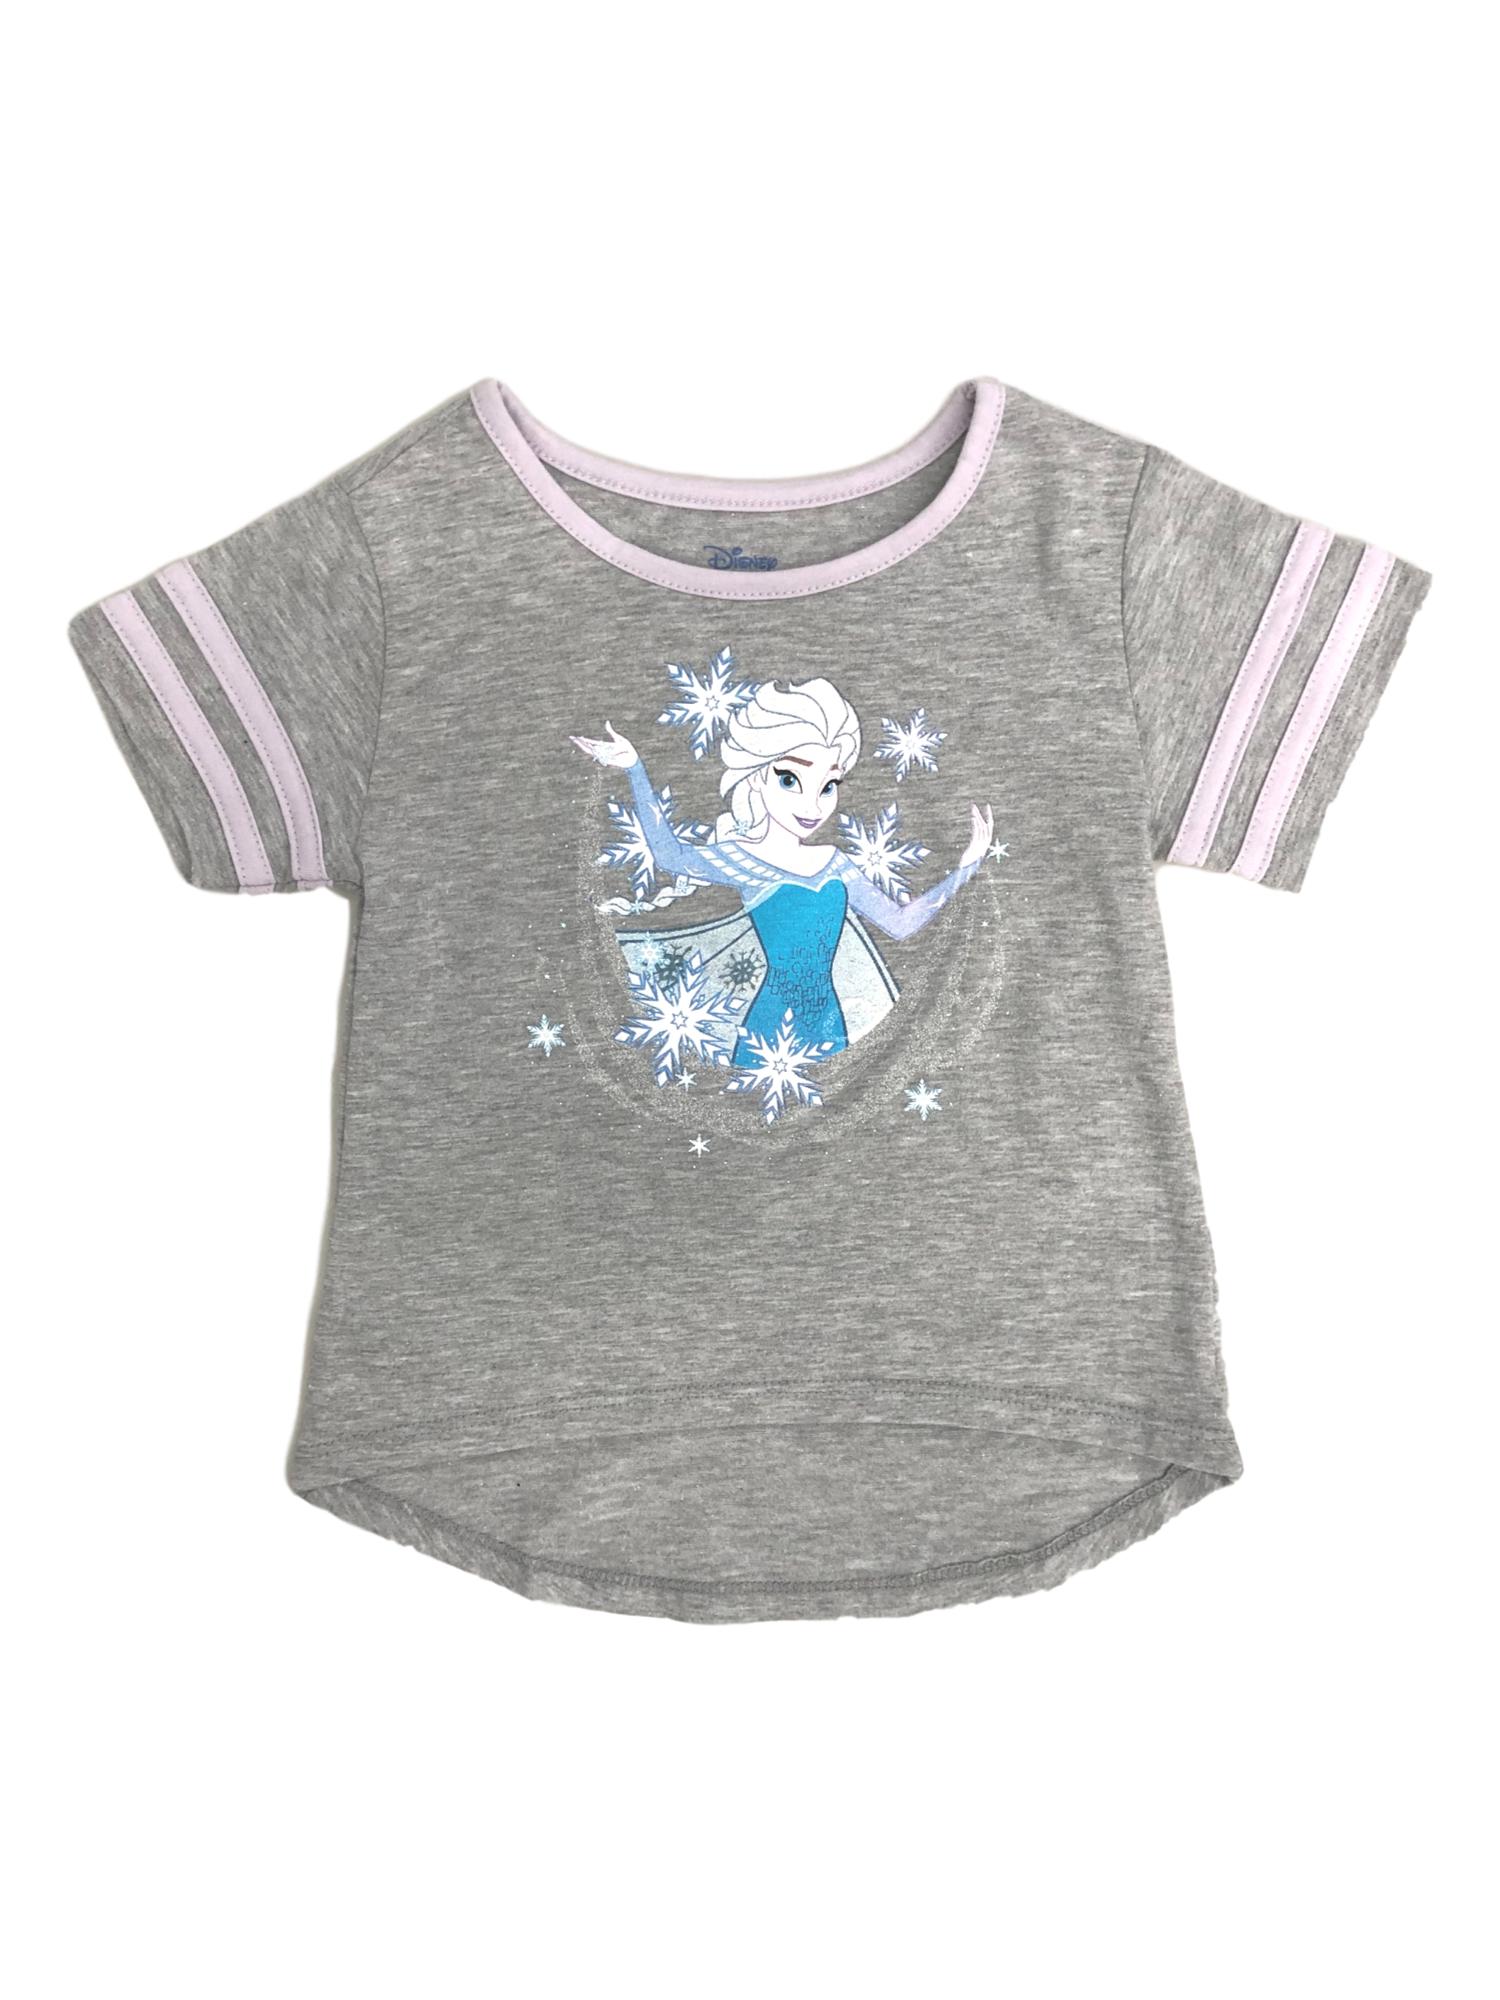 Disney Frozen Girls Gray & Purple Elsa Snowflake T-Shirt Shirt